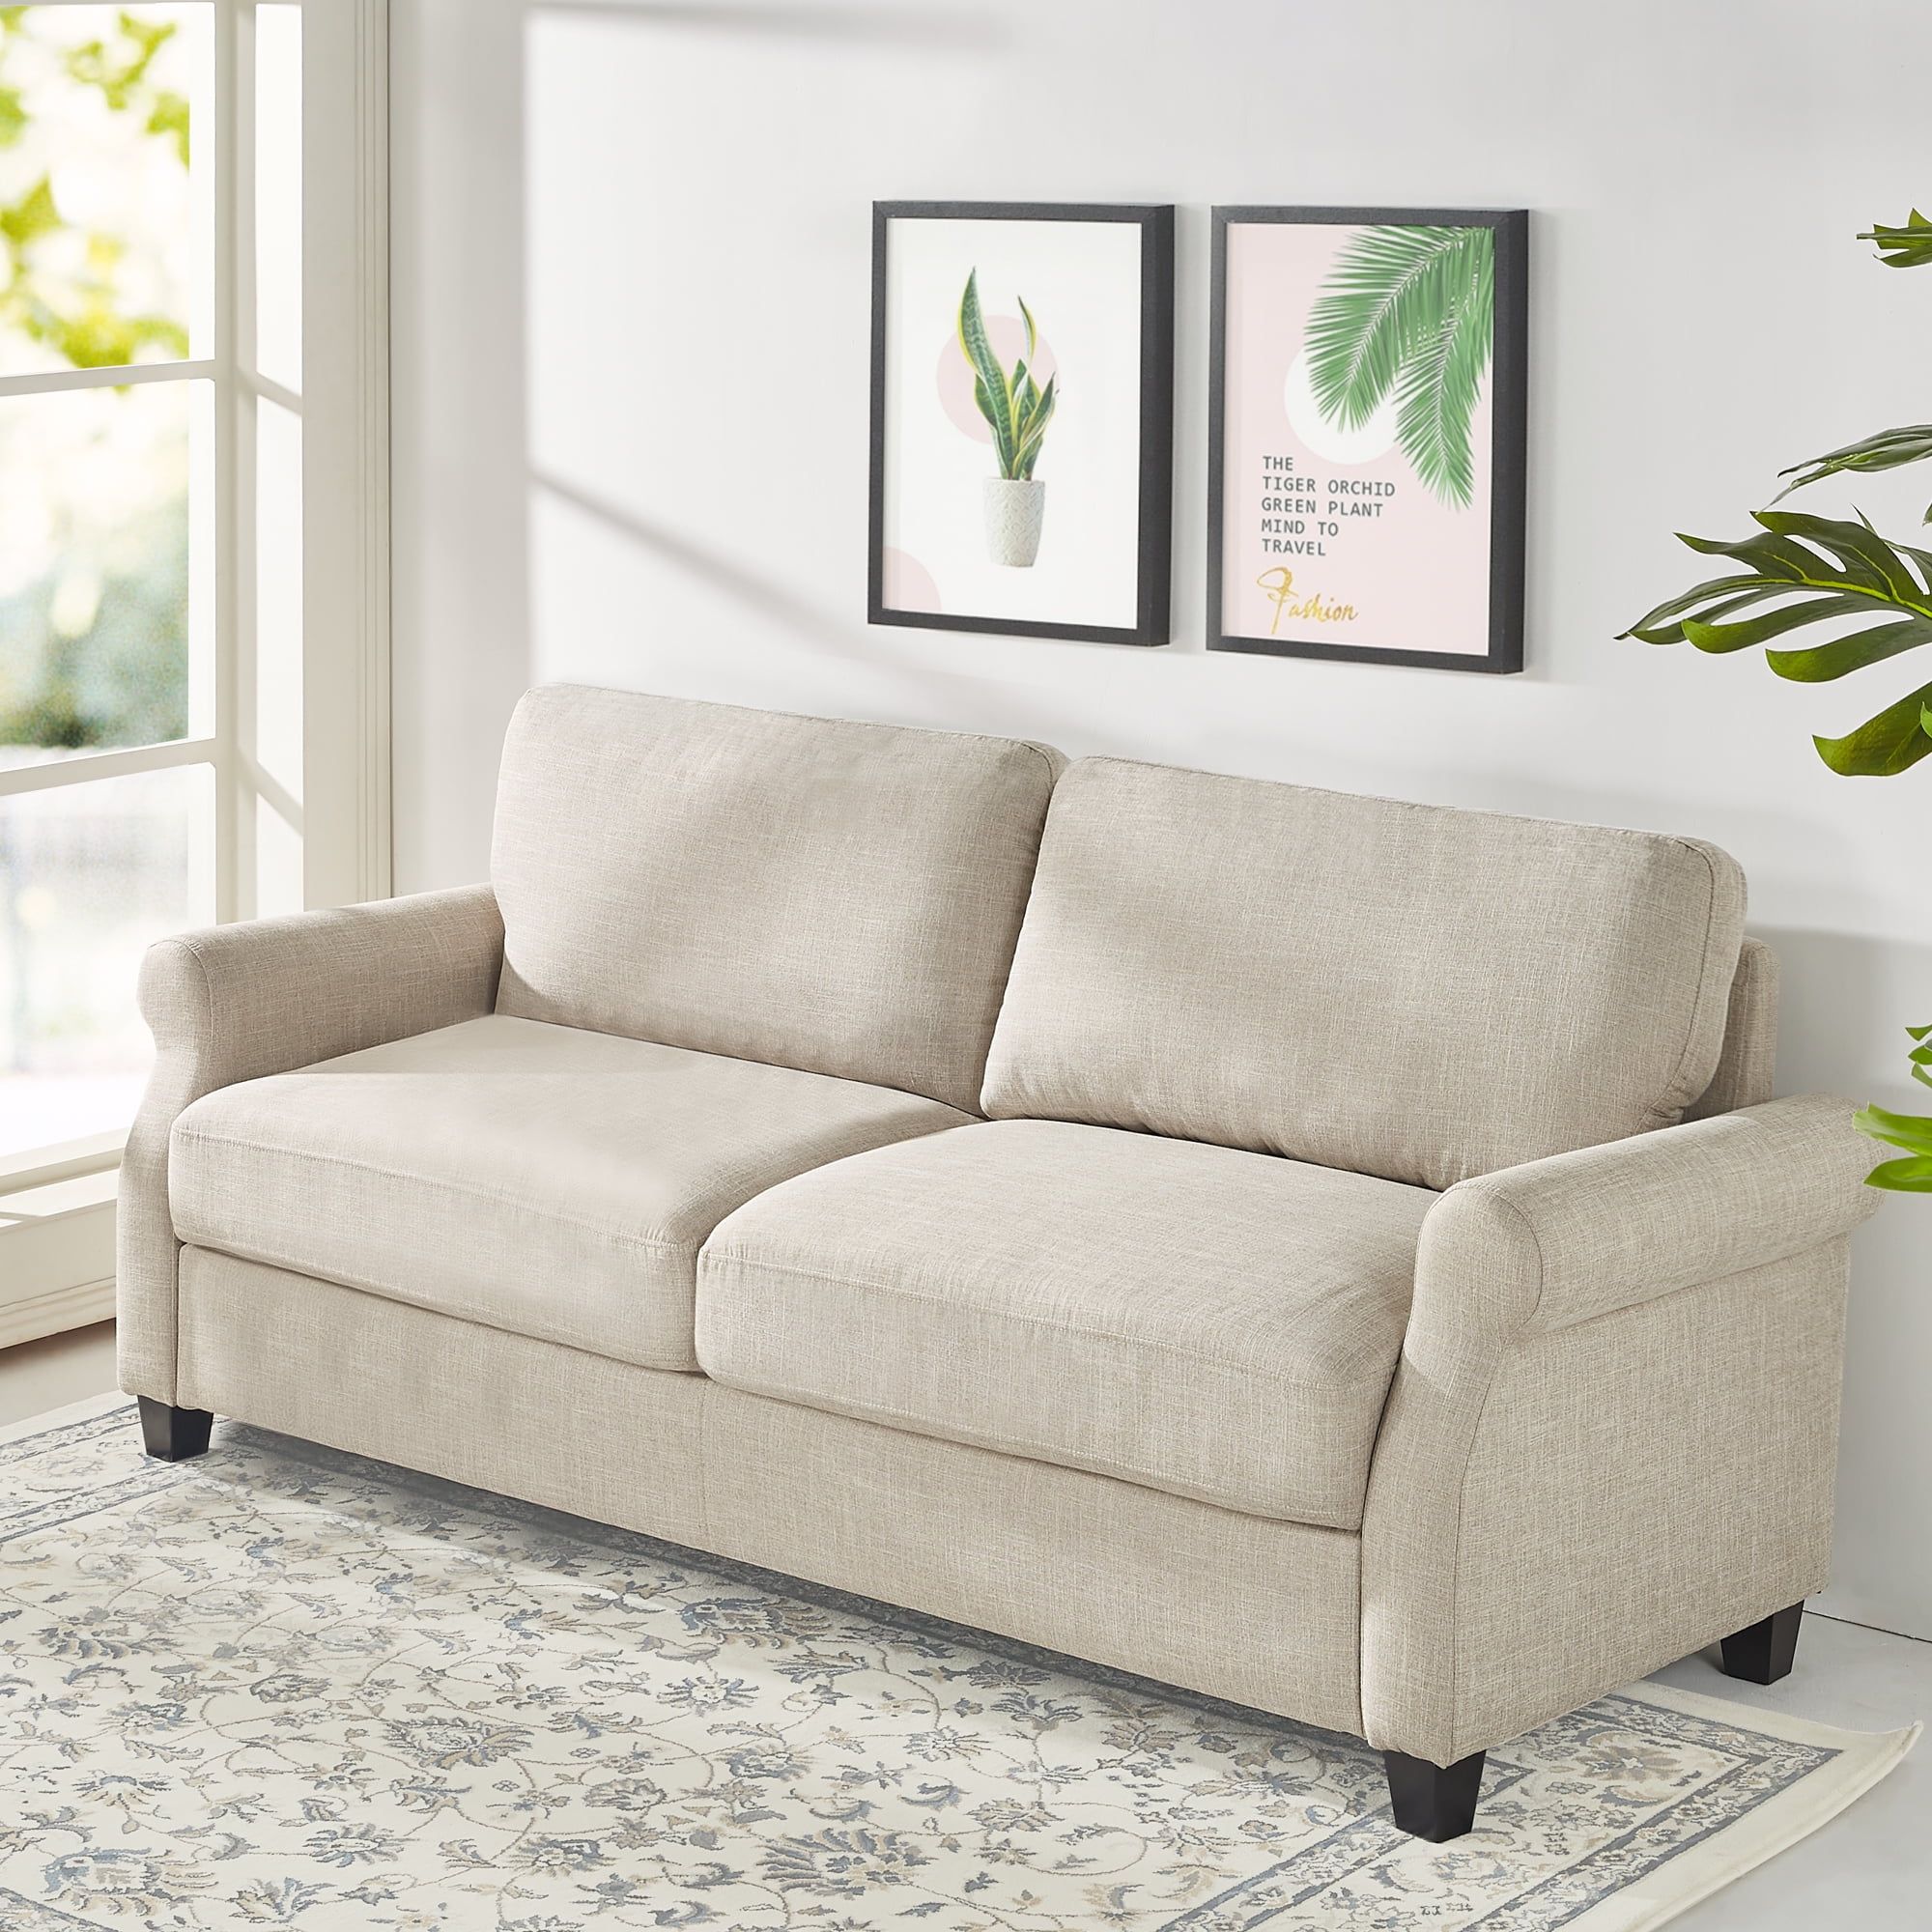 Woven Paths Josh Sofa Couch, Beige Fabric – Walmart Inside Sofas In Beige (Photo 2 of 15)